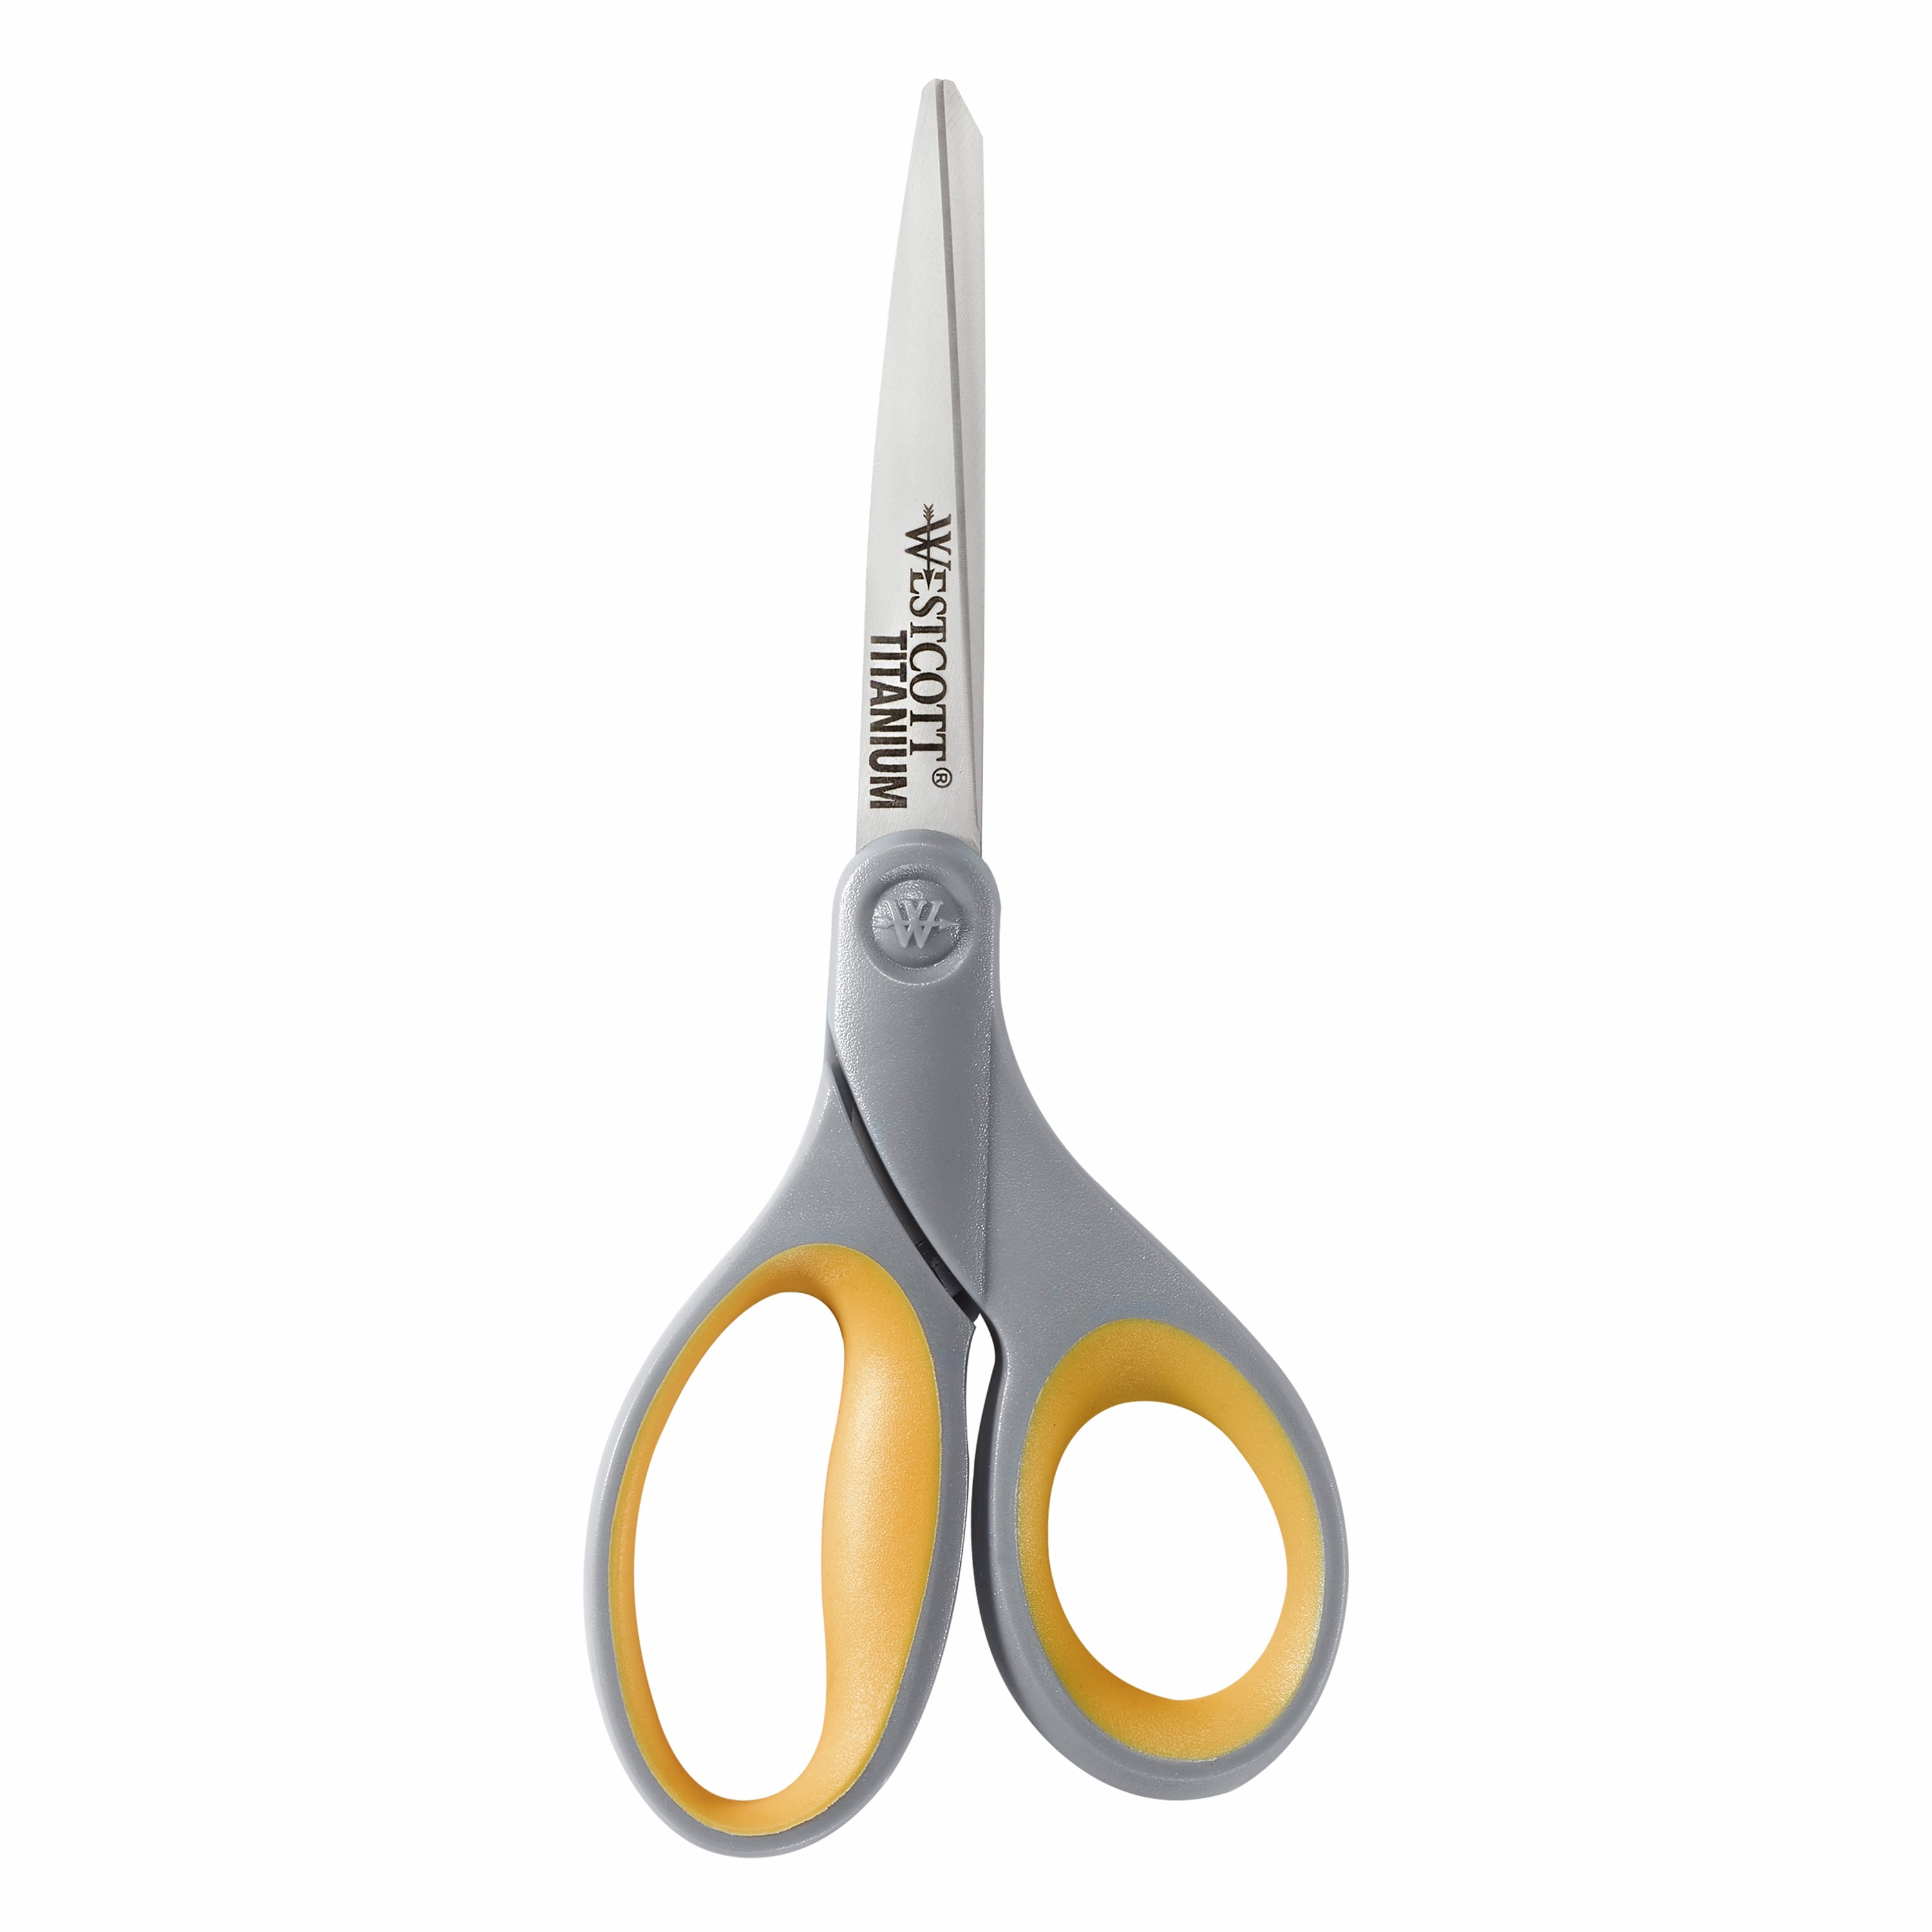 Acme Titanium Bonded 5/7 Straight Scissors, Gray/Yellow - 2 pack